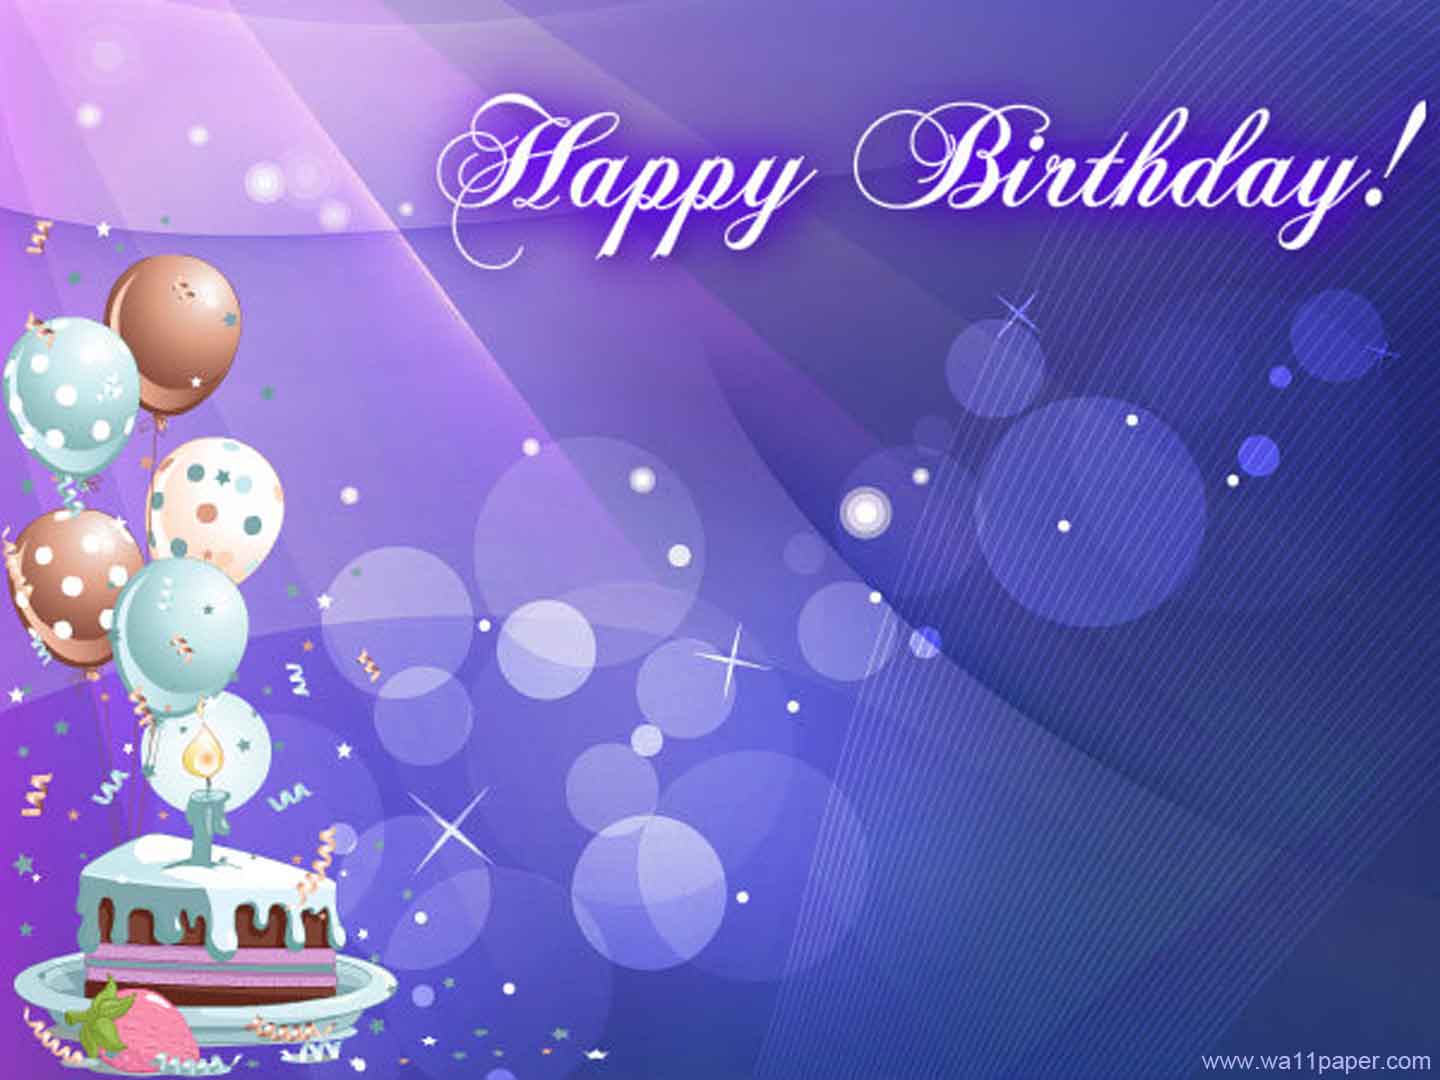 48+] Happy Birthday Wallpaper for Facebook - WallpaperSafari